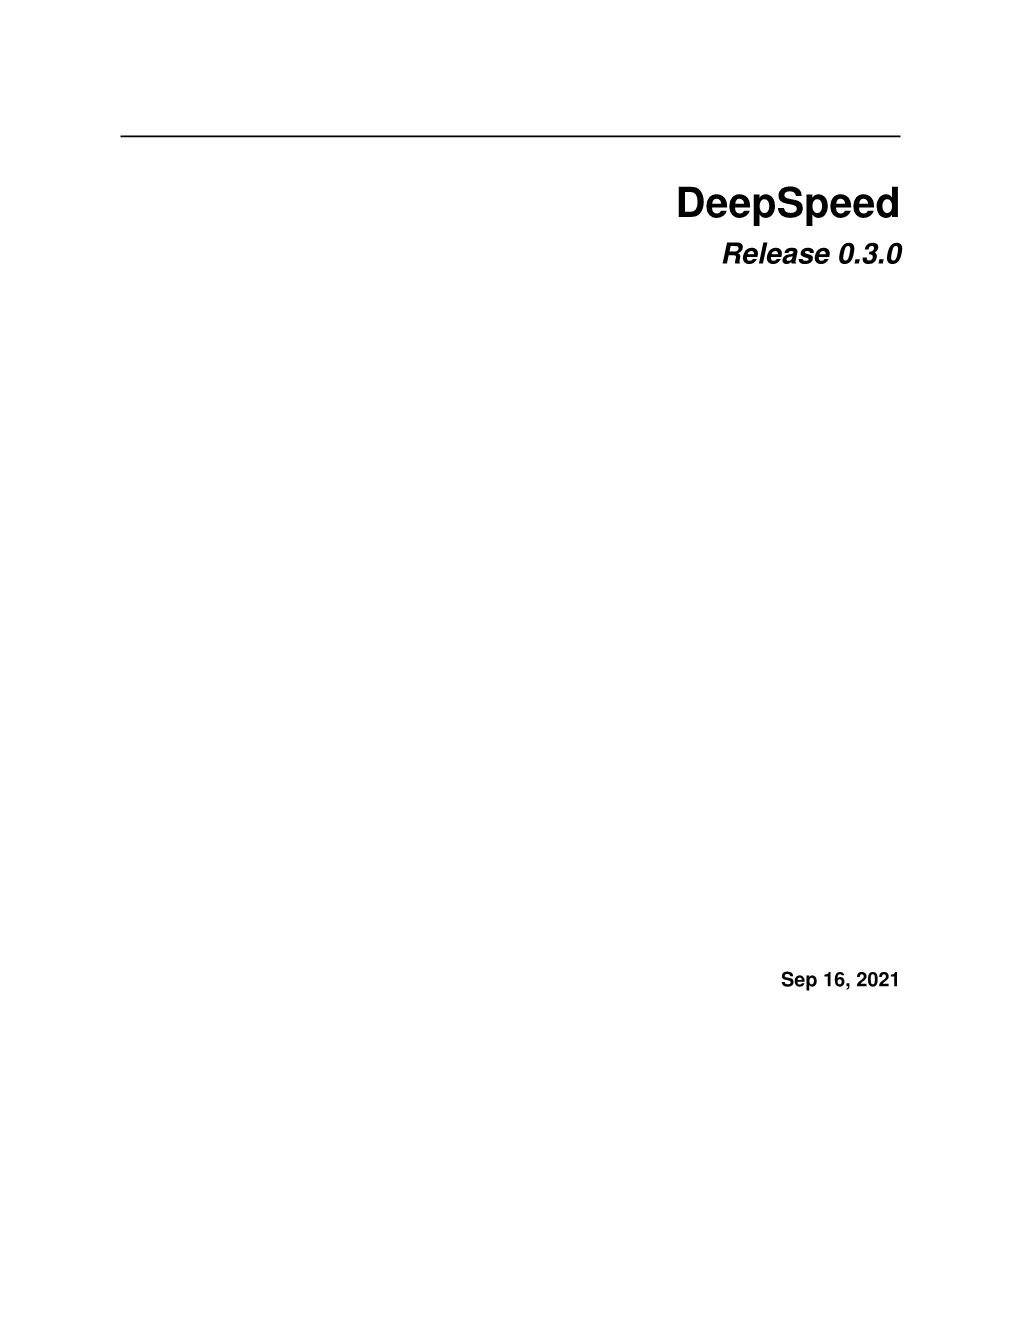 Deepspeed Release 0.3.0